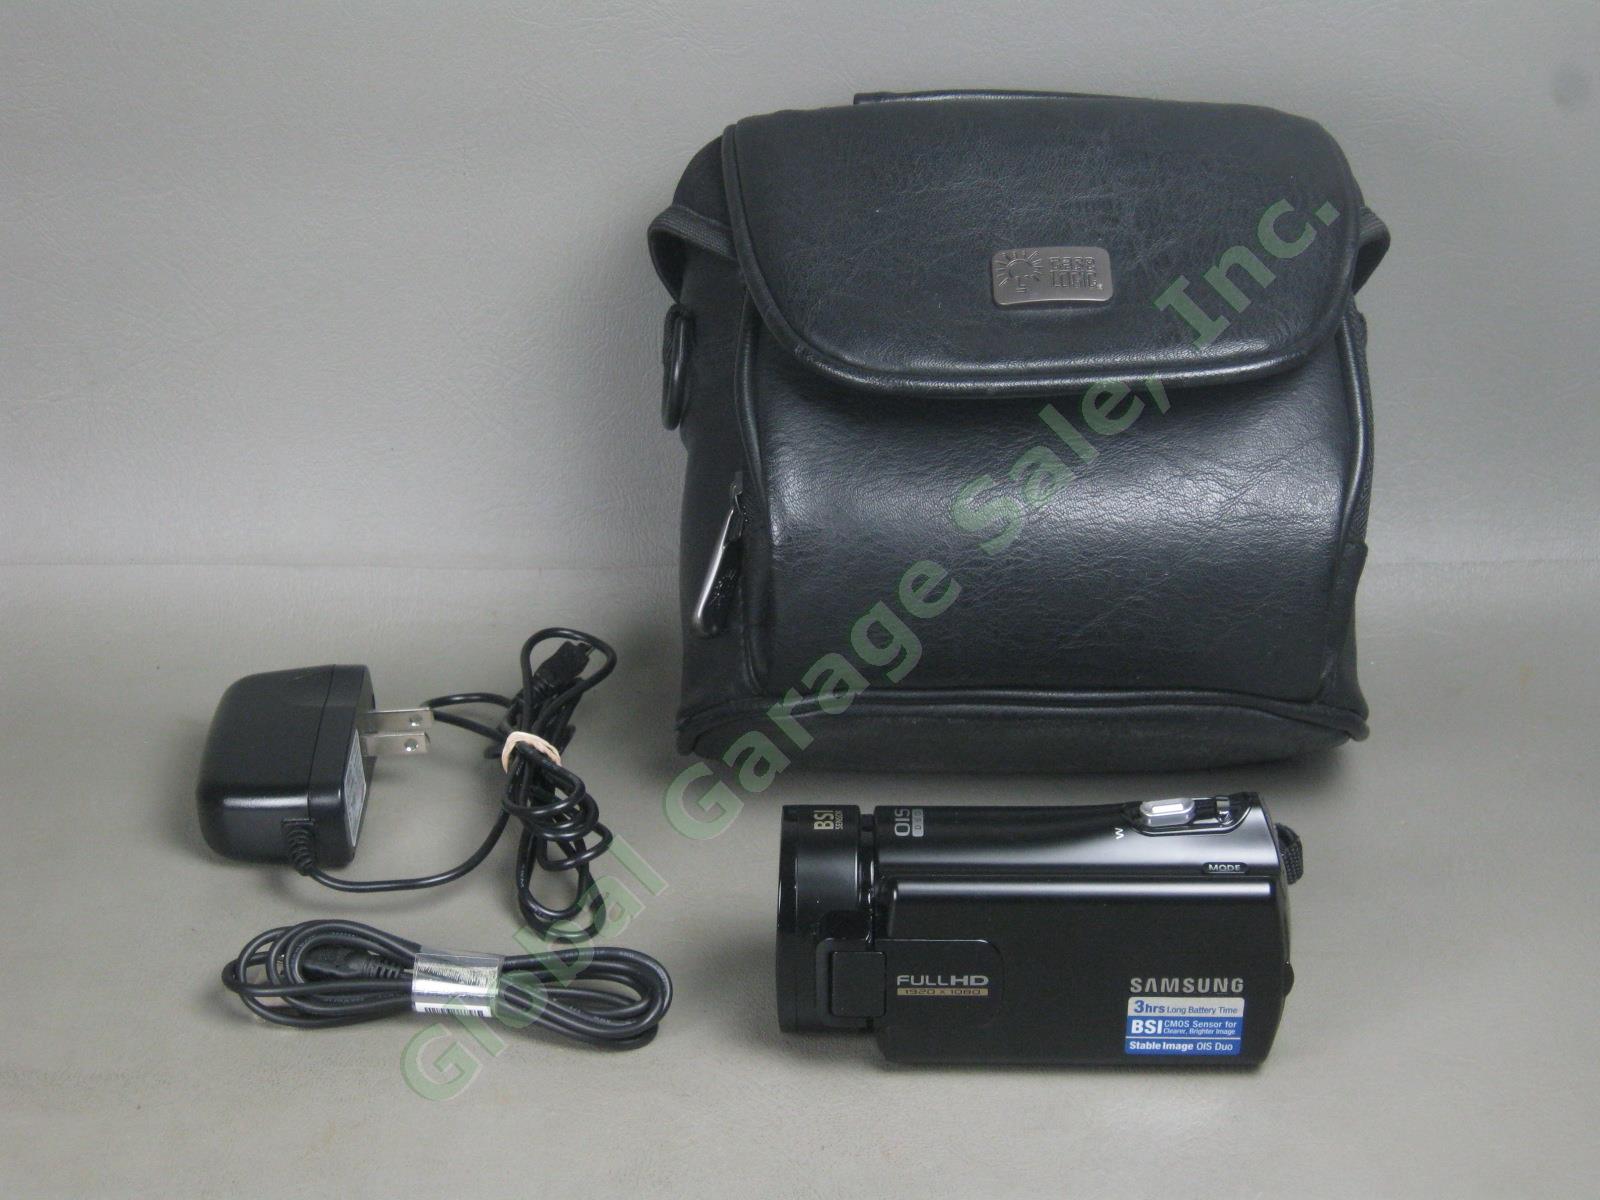 Samsung Full HD 1920x1080 1080i Camcorder HMX-H300BN/XAA Video Camera MINT COND!